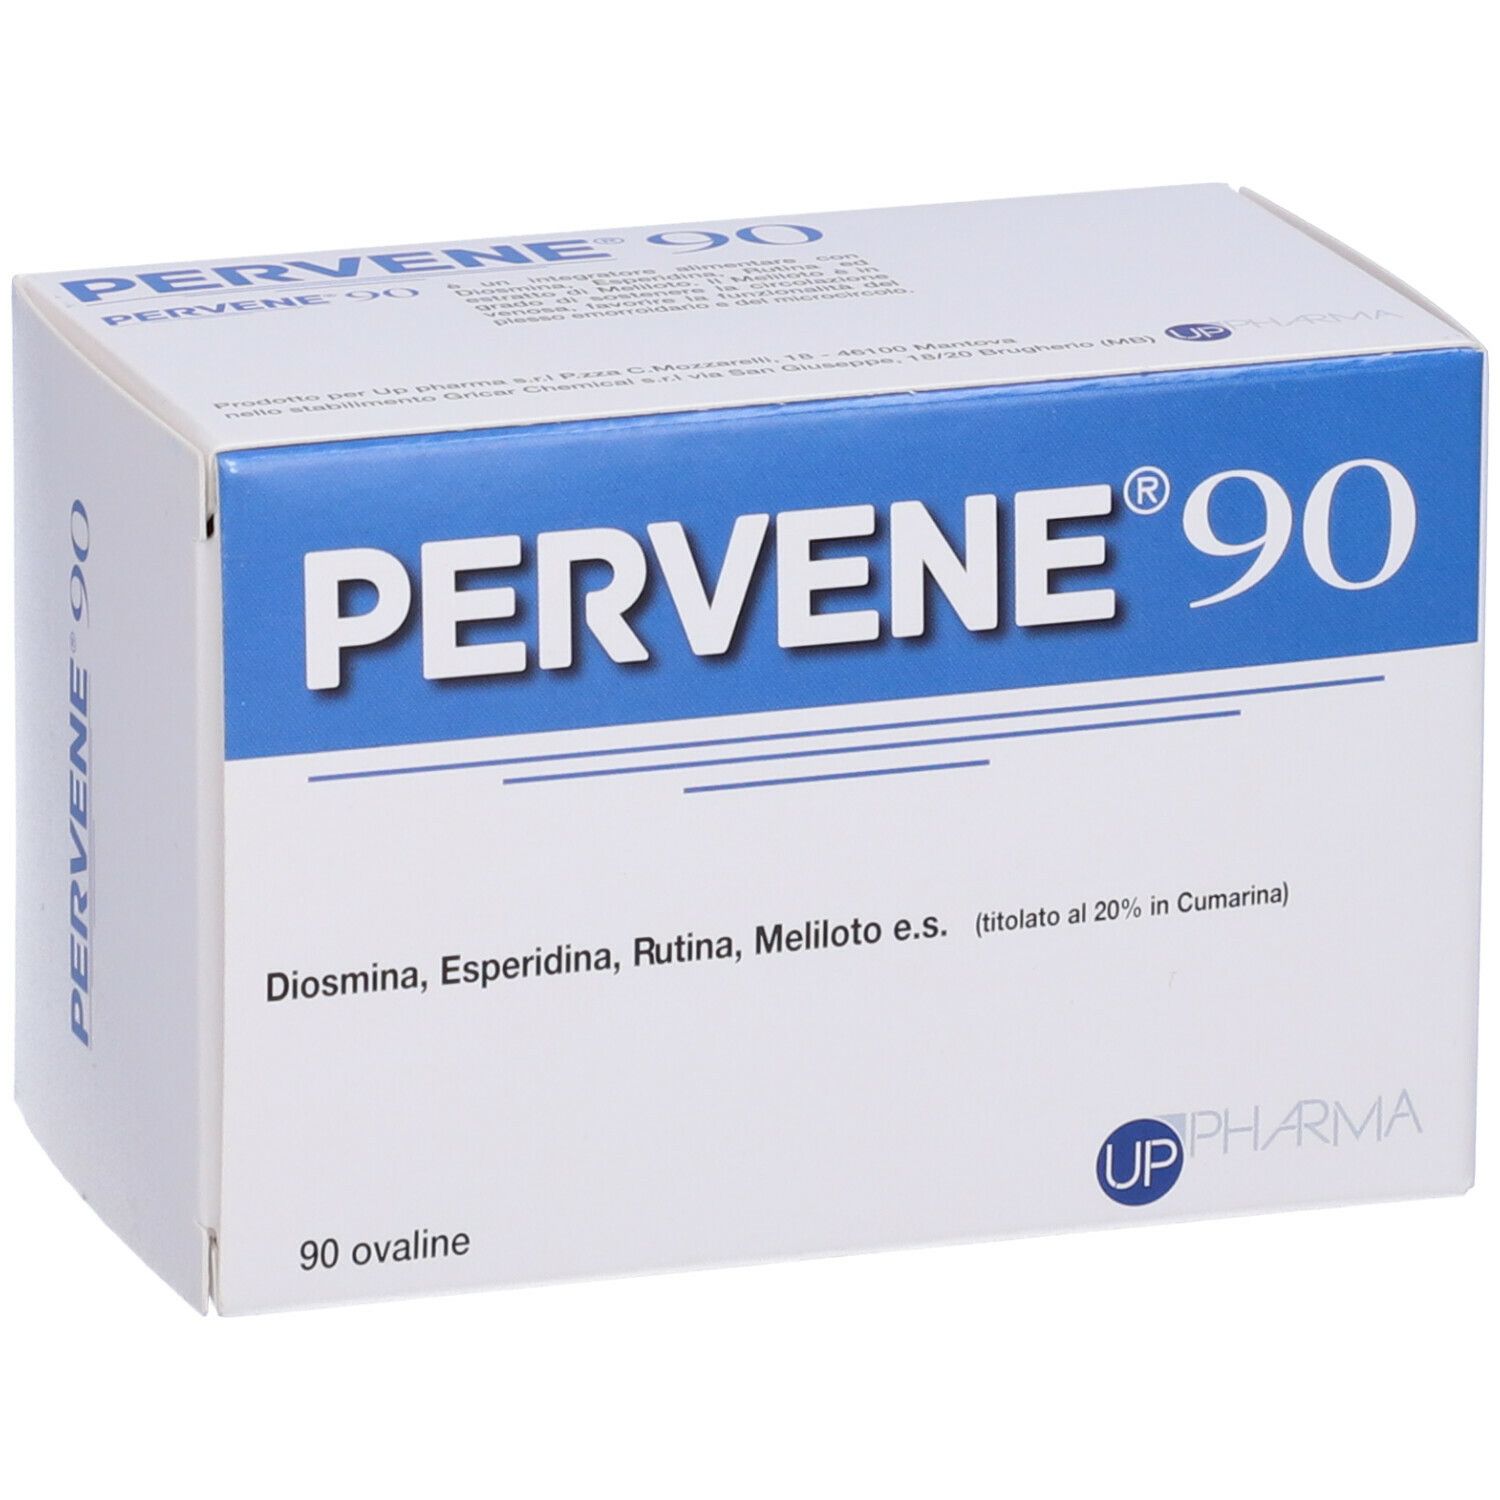 Pervene® 90